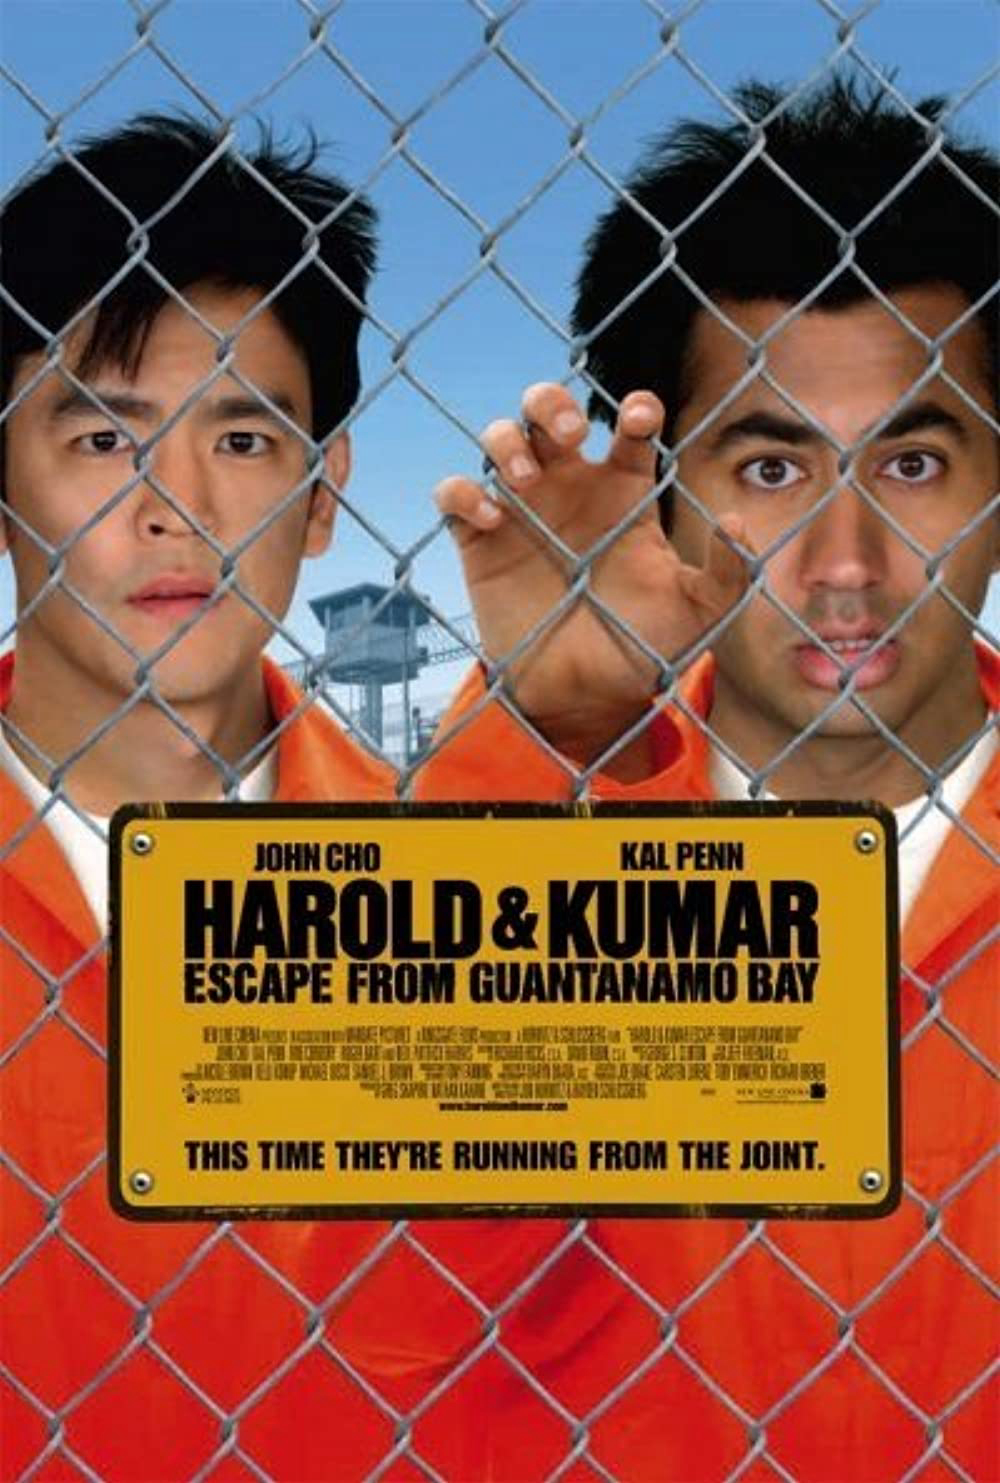 Poster Phim Harold & Kumar Thoát Khỏi Ngục Guantanamo (Harold & Kumar Escape from Guantanamo Bay)